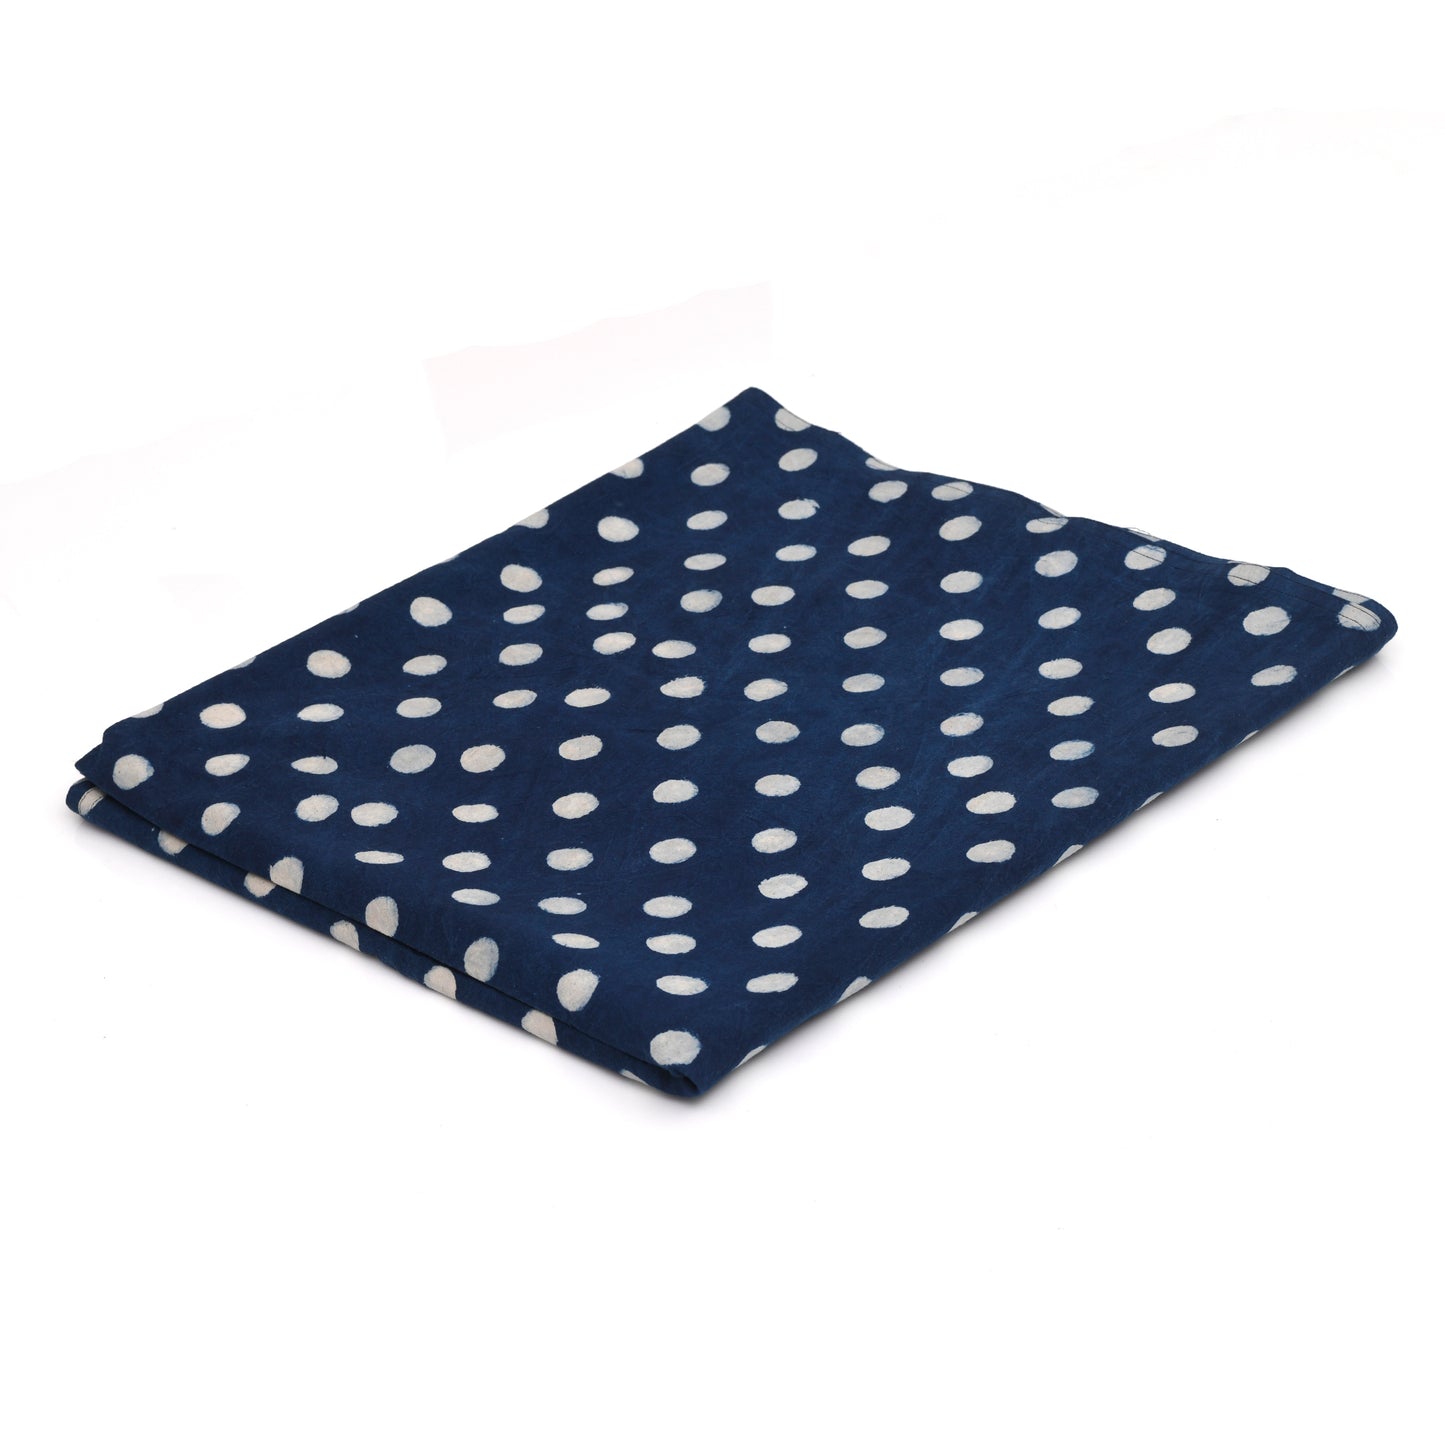 Indigo Dotty Square Tablecloth (180 X 180 cm)